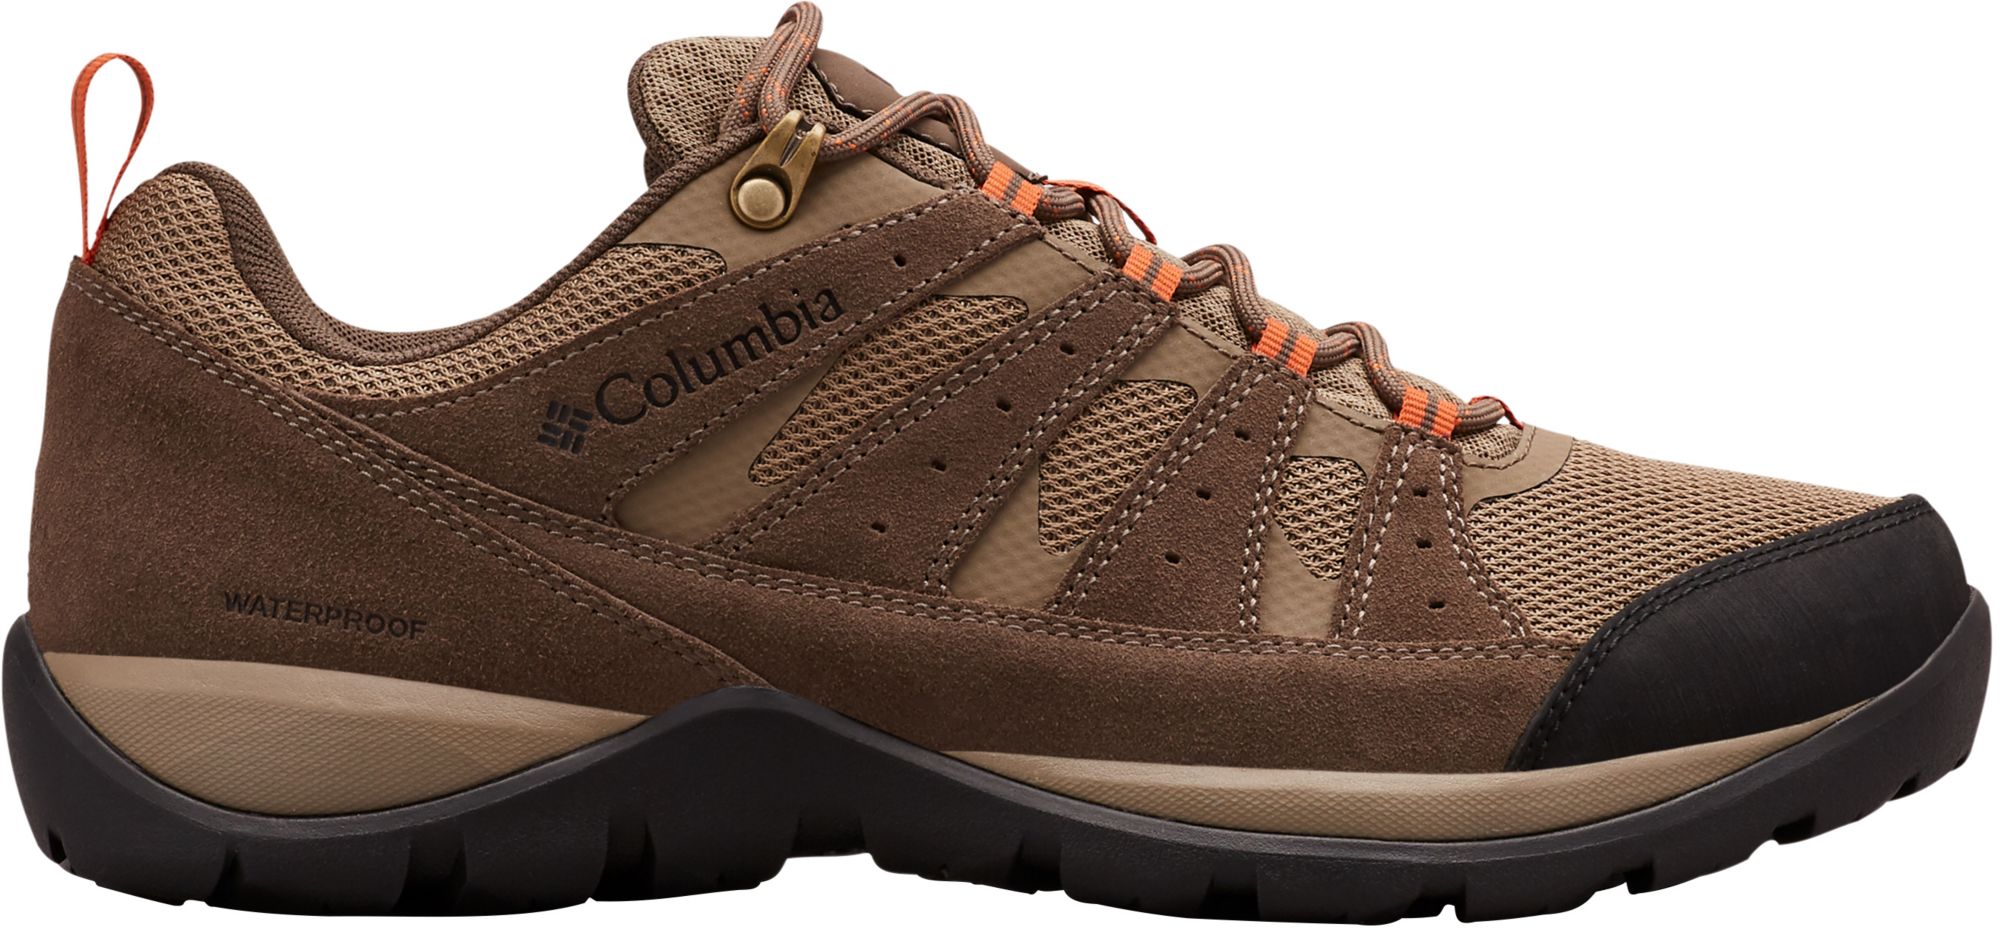 redmond columbia shoes